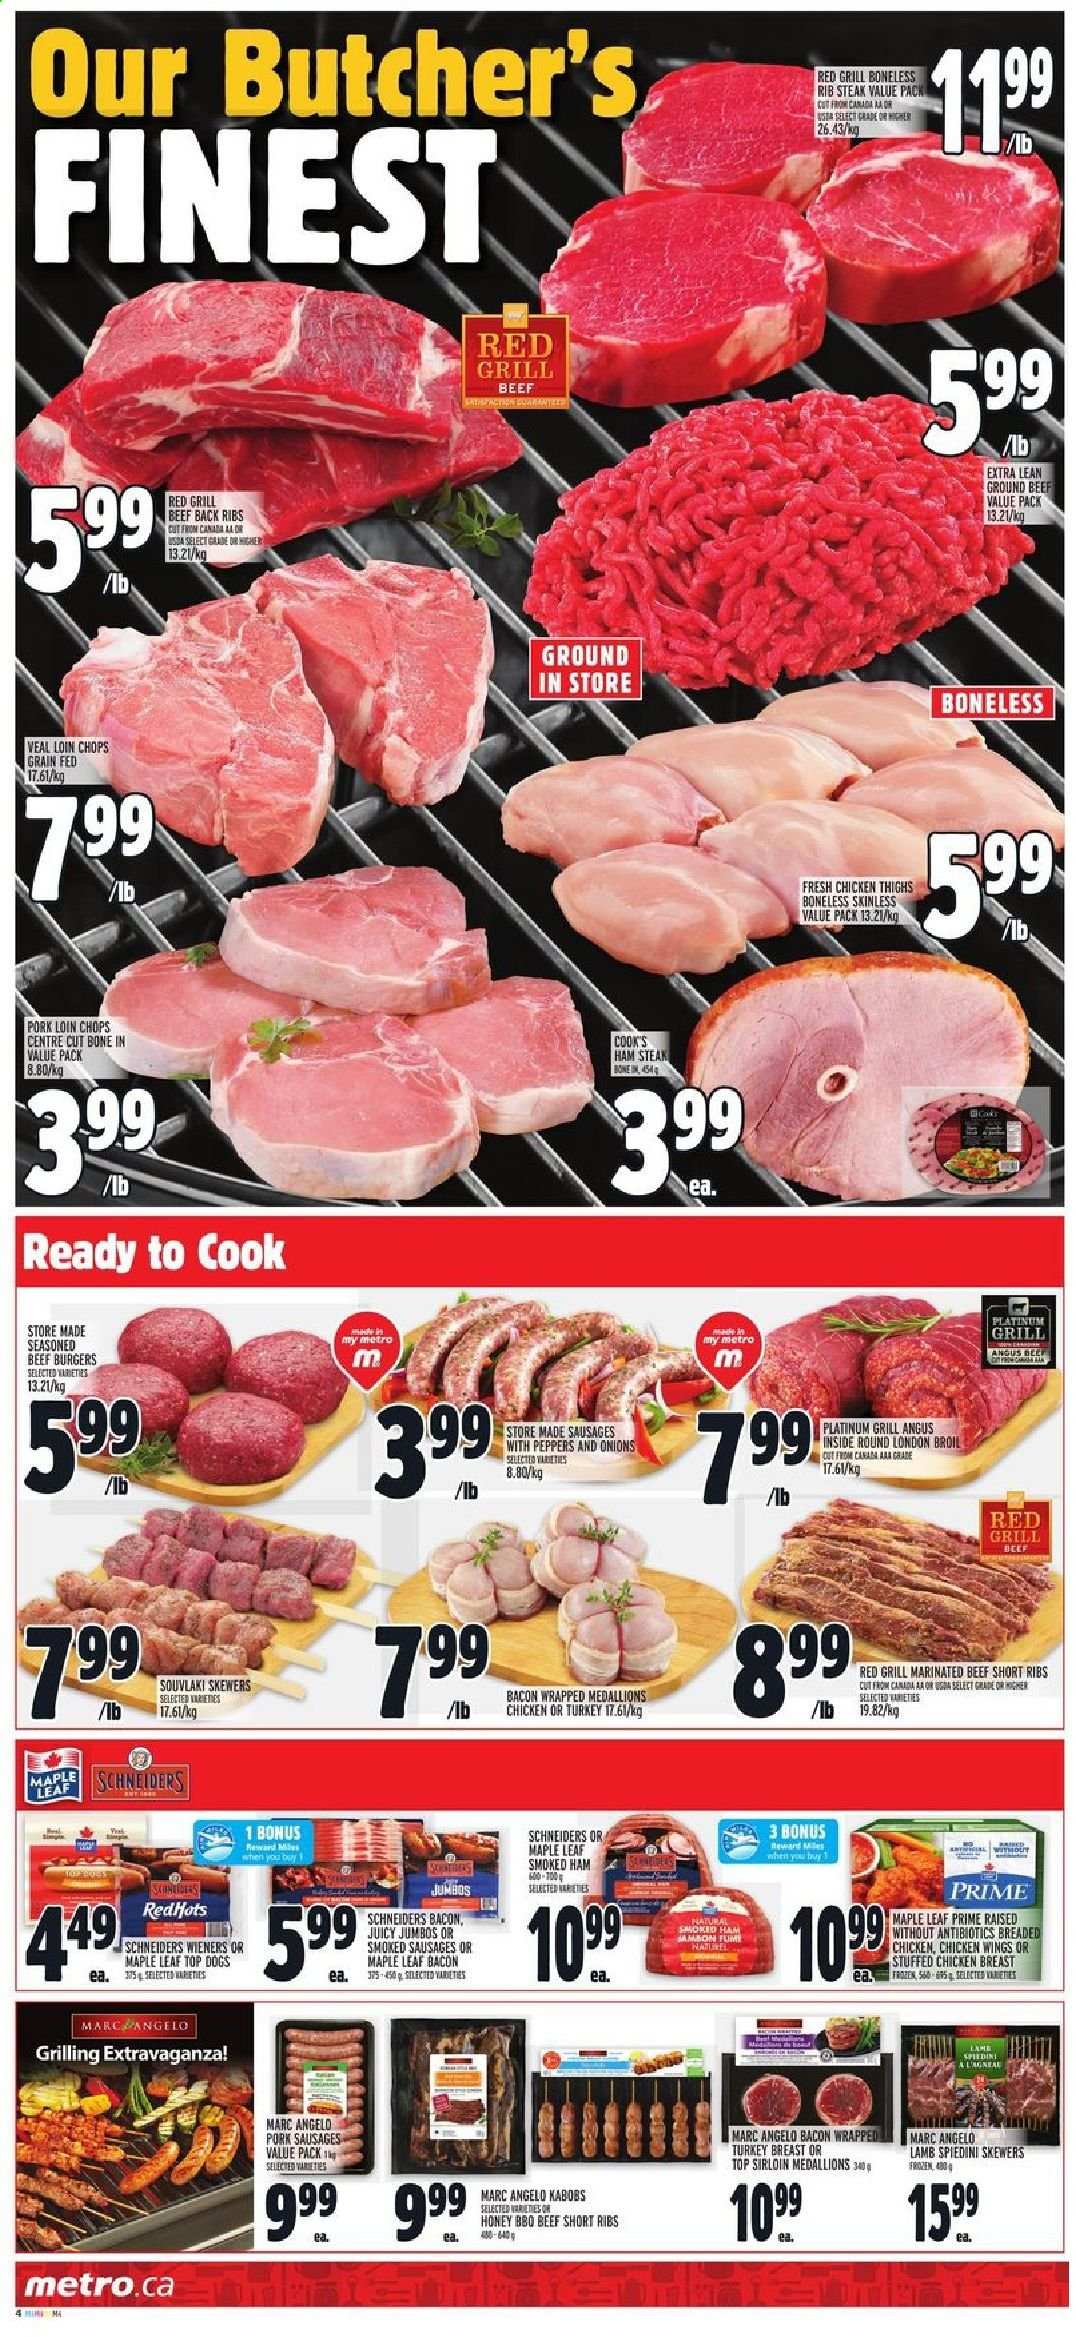 thumbnail - Metro Flyer - May 20, 2021 - May 26, 2021 - Sales products - hamburger, fried chicken, beef burger, stuffed chicken, bacon, ham, smoked ham, Cook's, sausage, ham steaks, chicken wings, turkey breast, chicken thighs, chicken, turkey, beef meat, beef ribs, ground beef, marinated beef, pork chops, pork loin, pork meat, steak. Page 4.